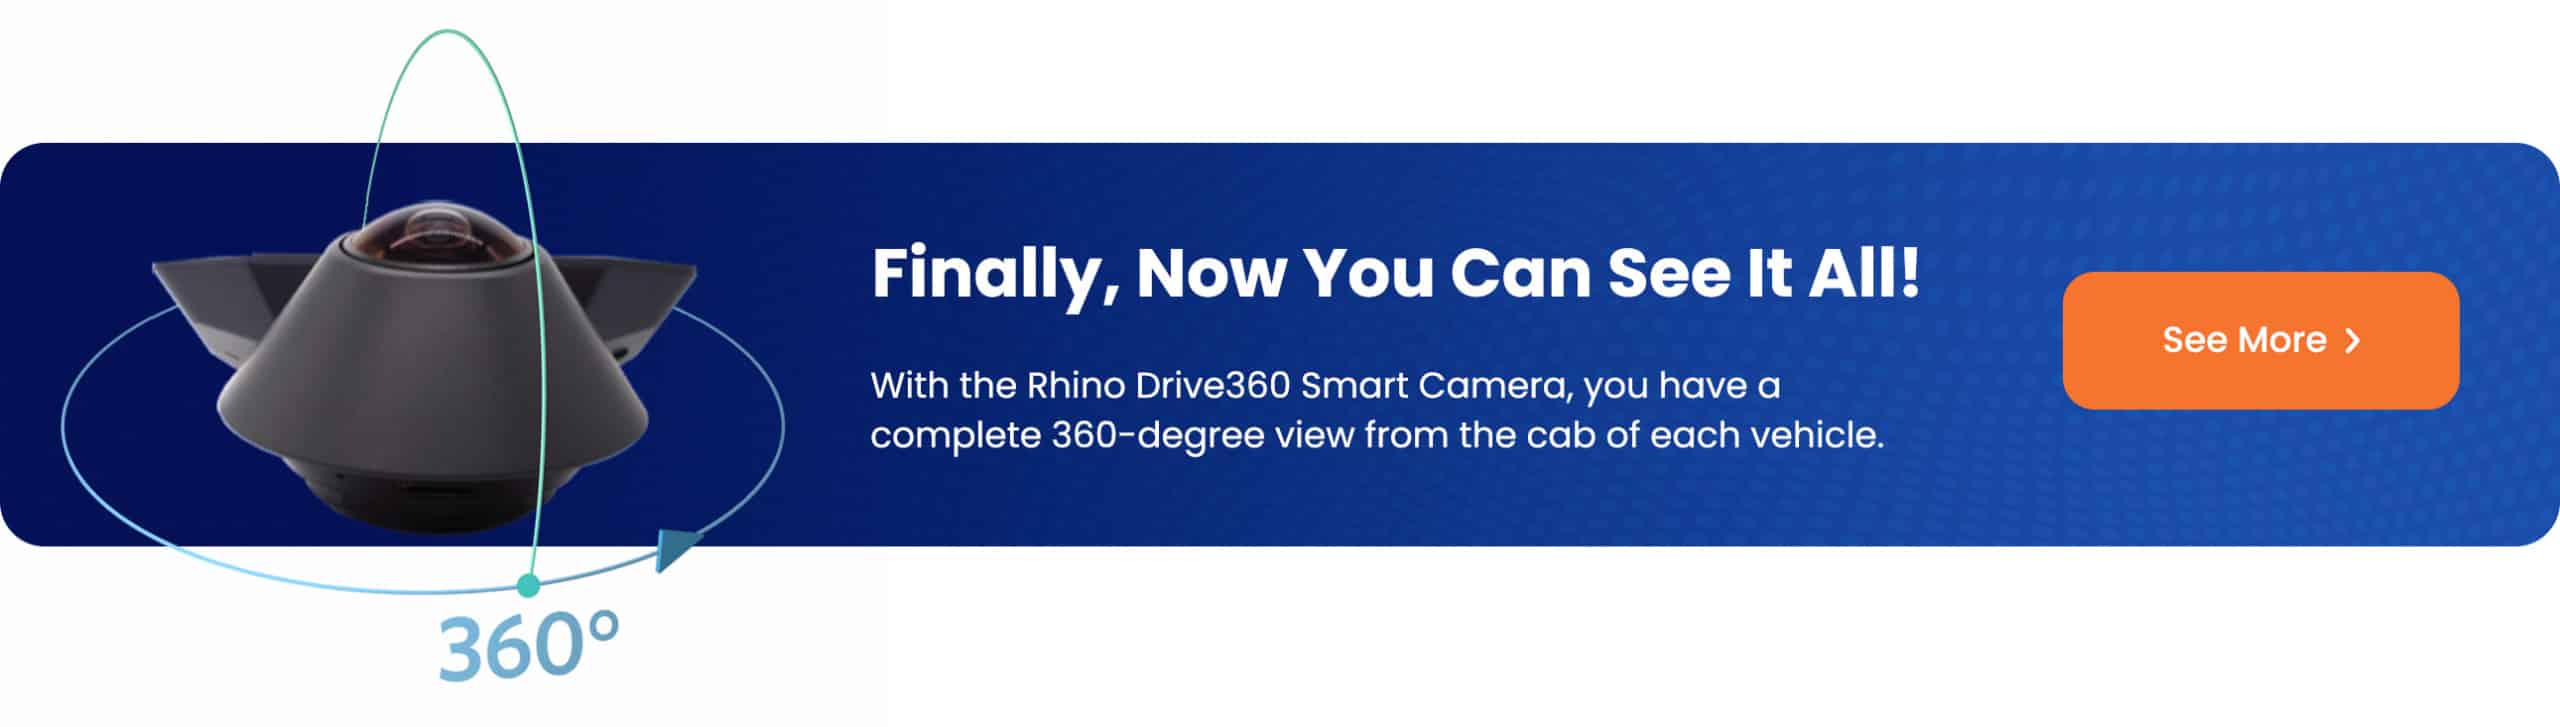 New-Rhino-Drive360-Camera-Banner-2